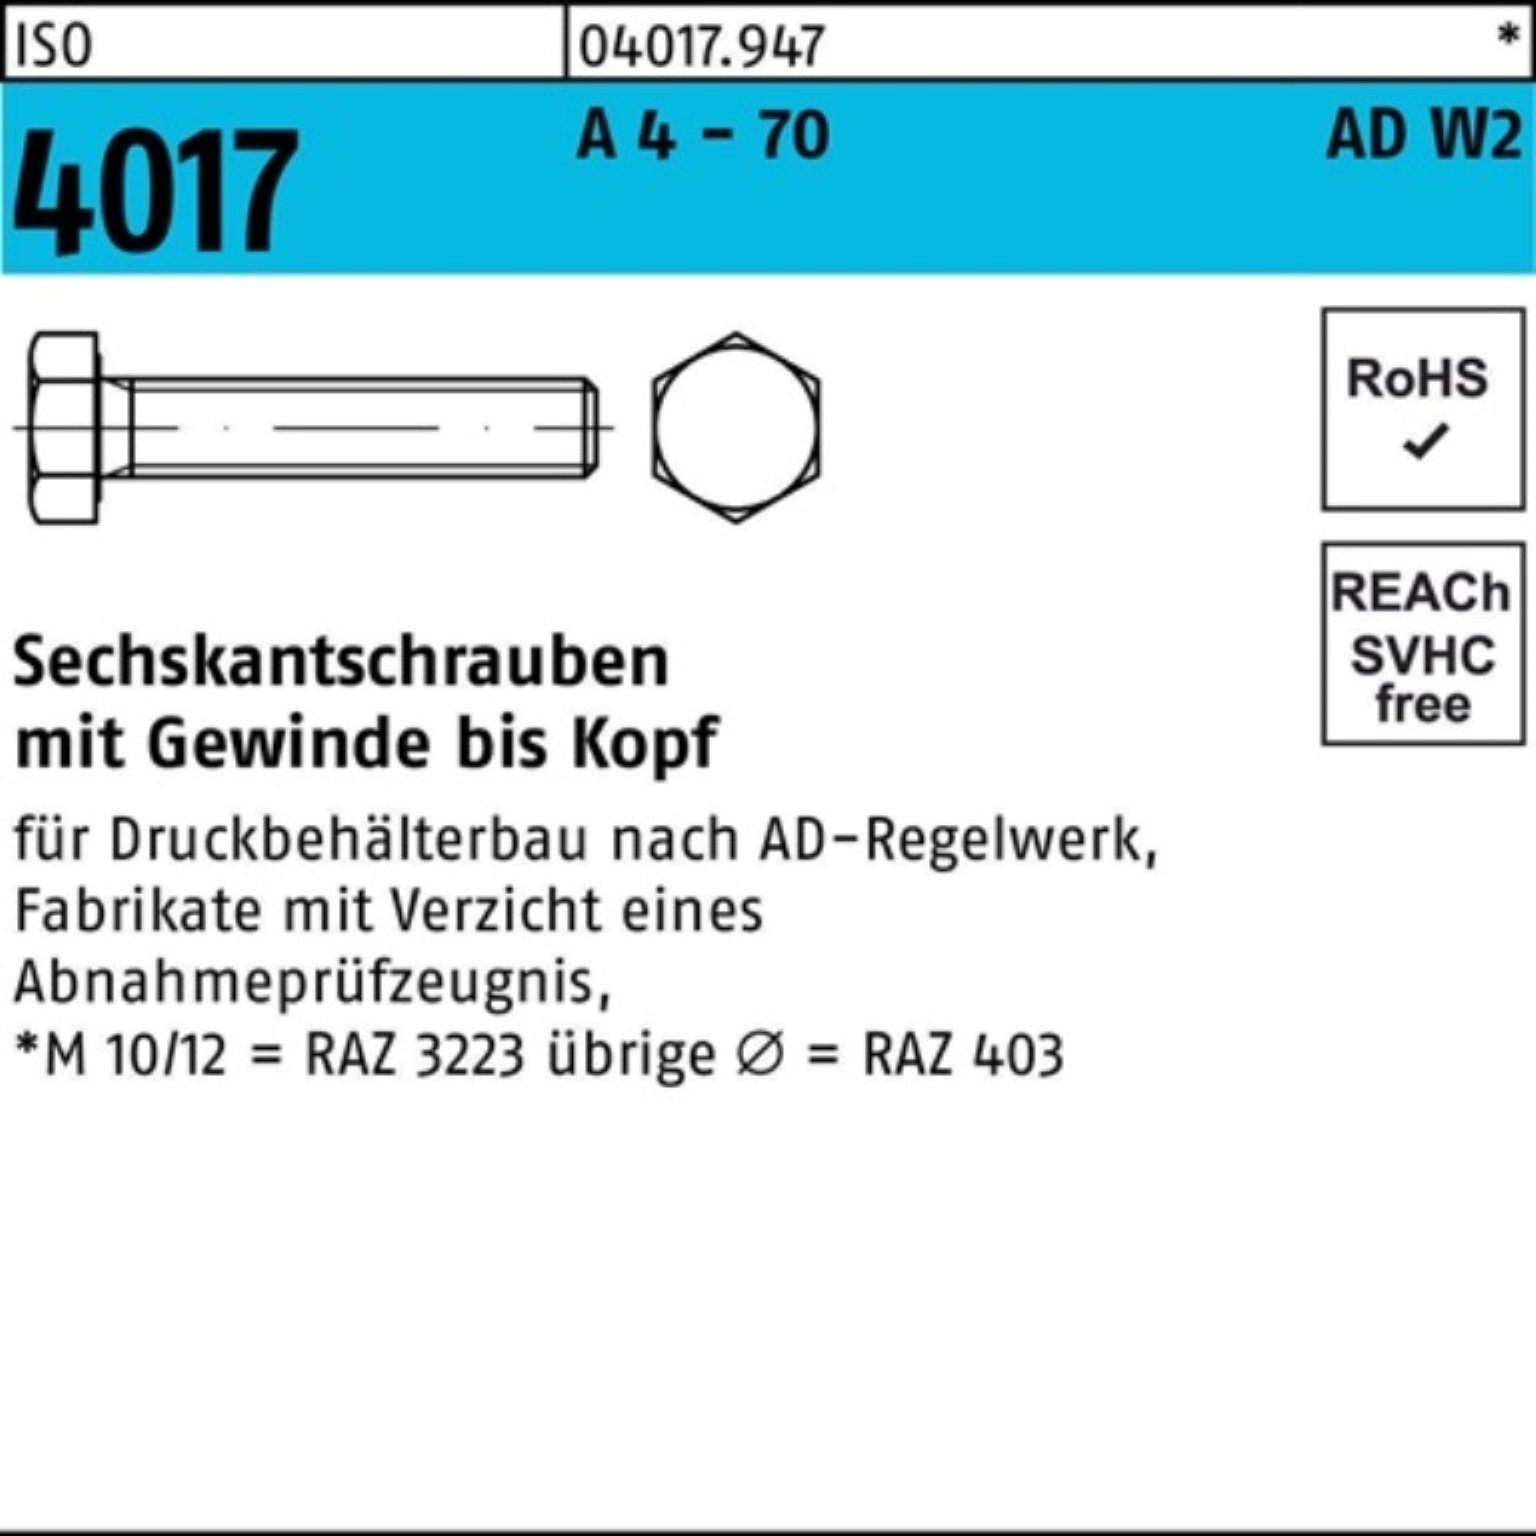 Bufab Sechskantschraube 100er Pack Sechskantschraube ISO 4017 VG M8x 40 A 4 - 70 AD-W2 100 St